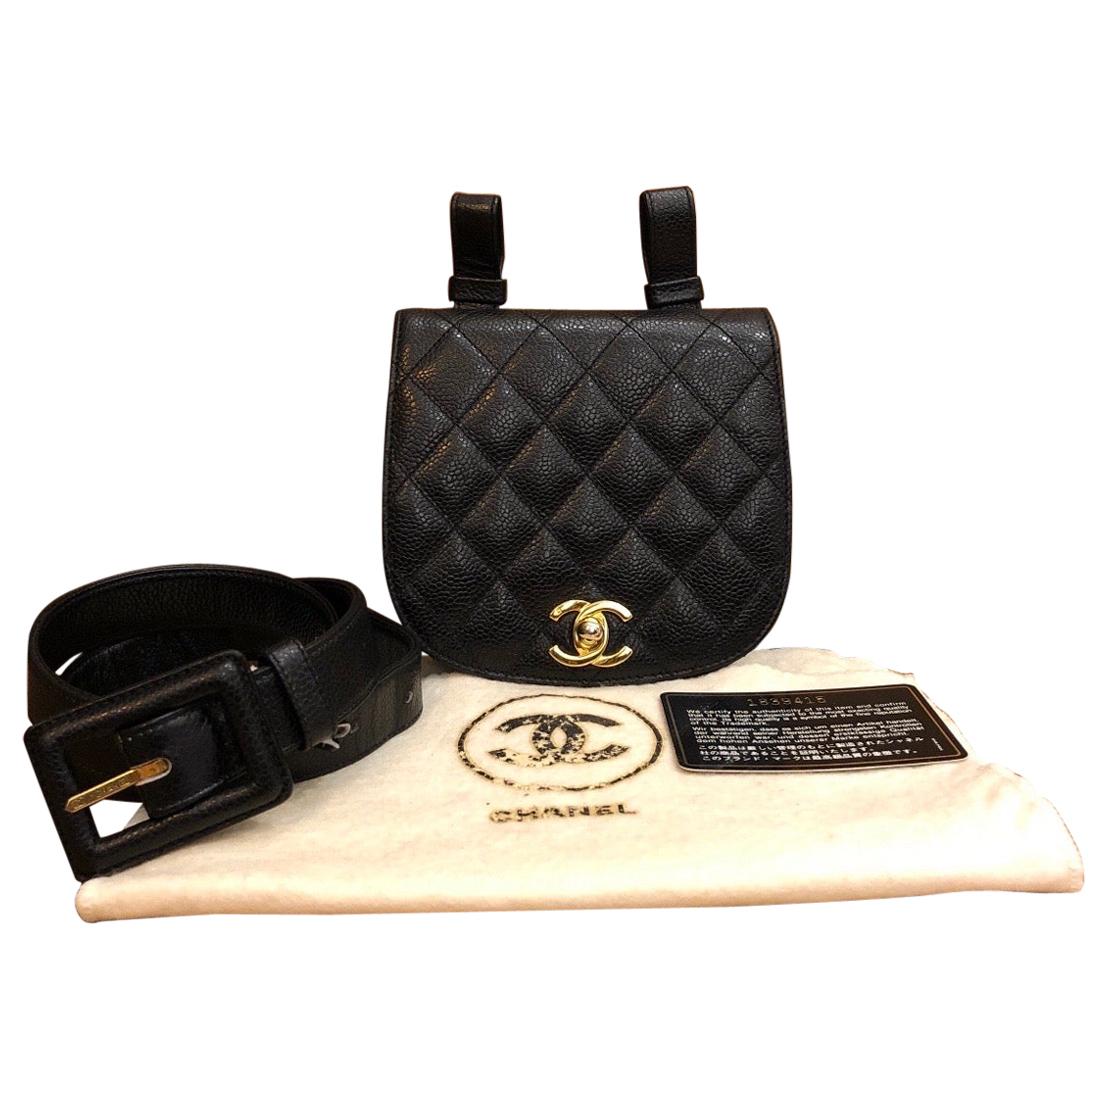 CHANEL Black Caviar Leather Belt Bag